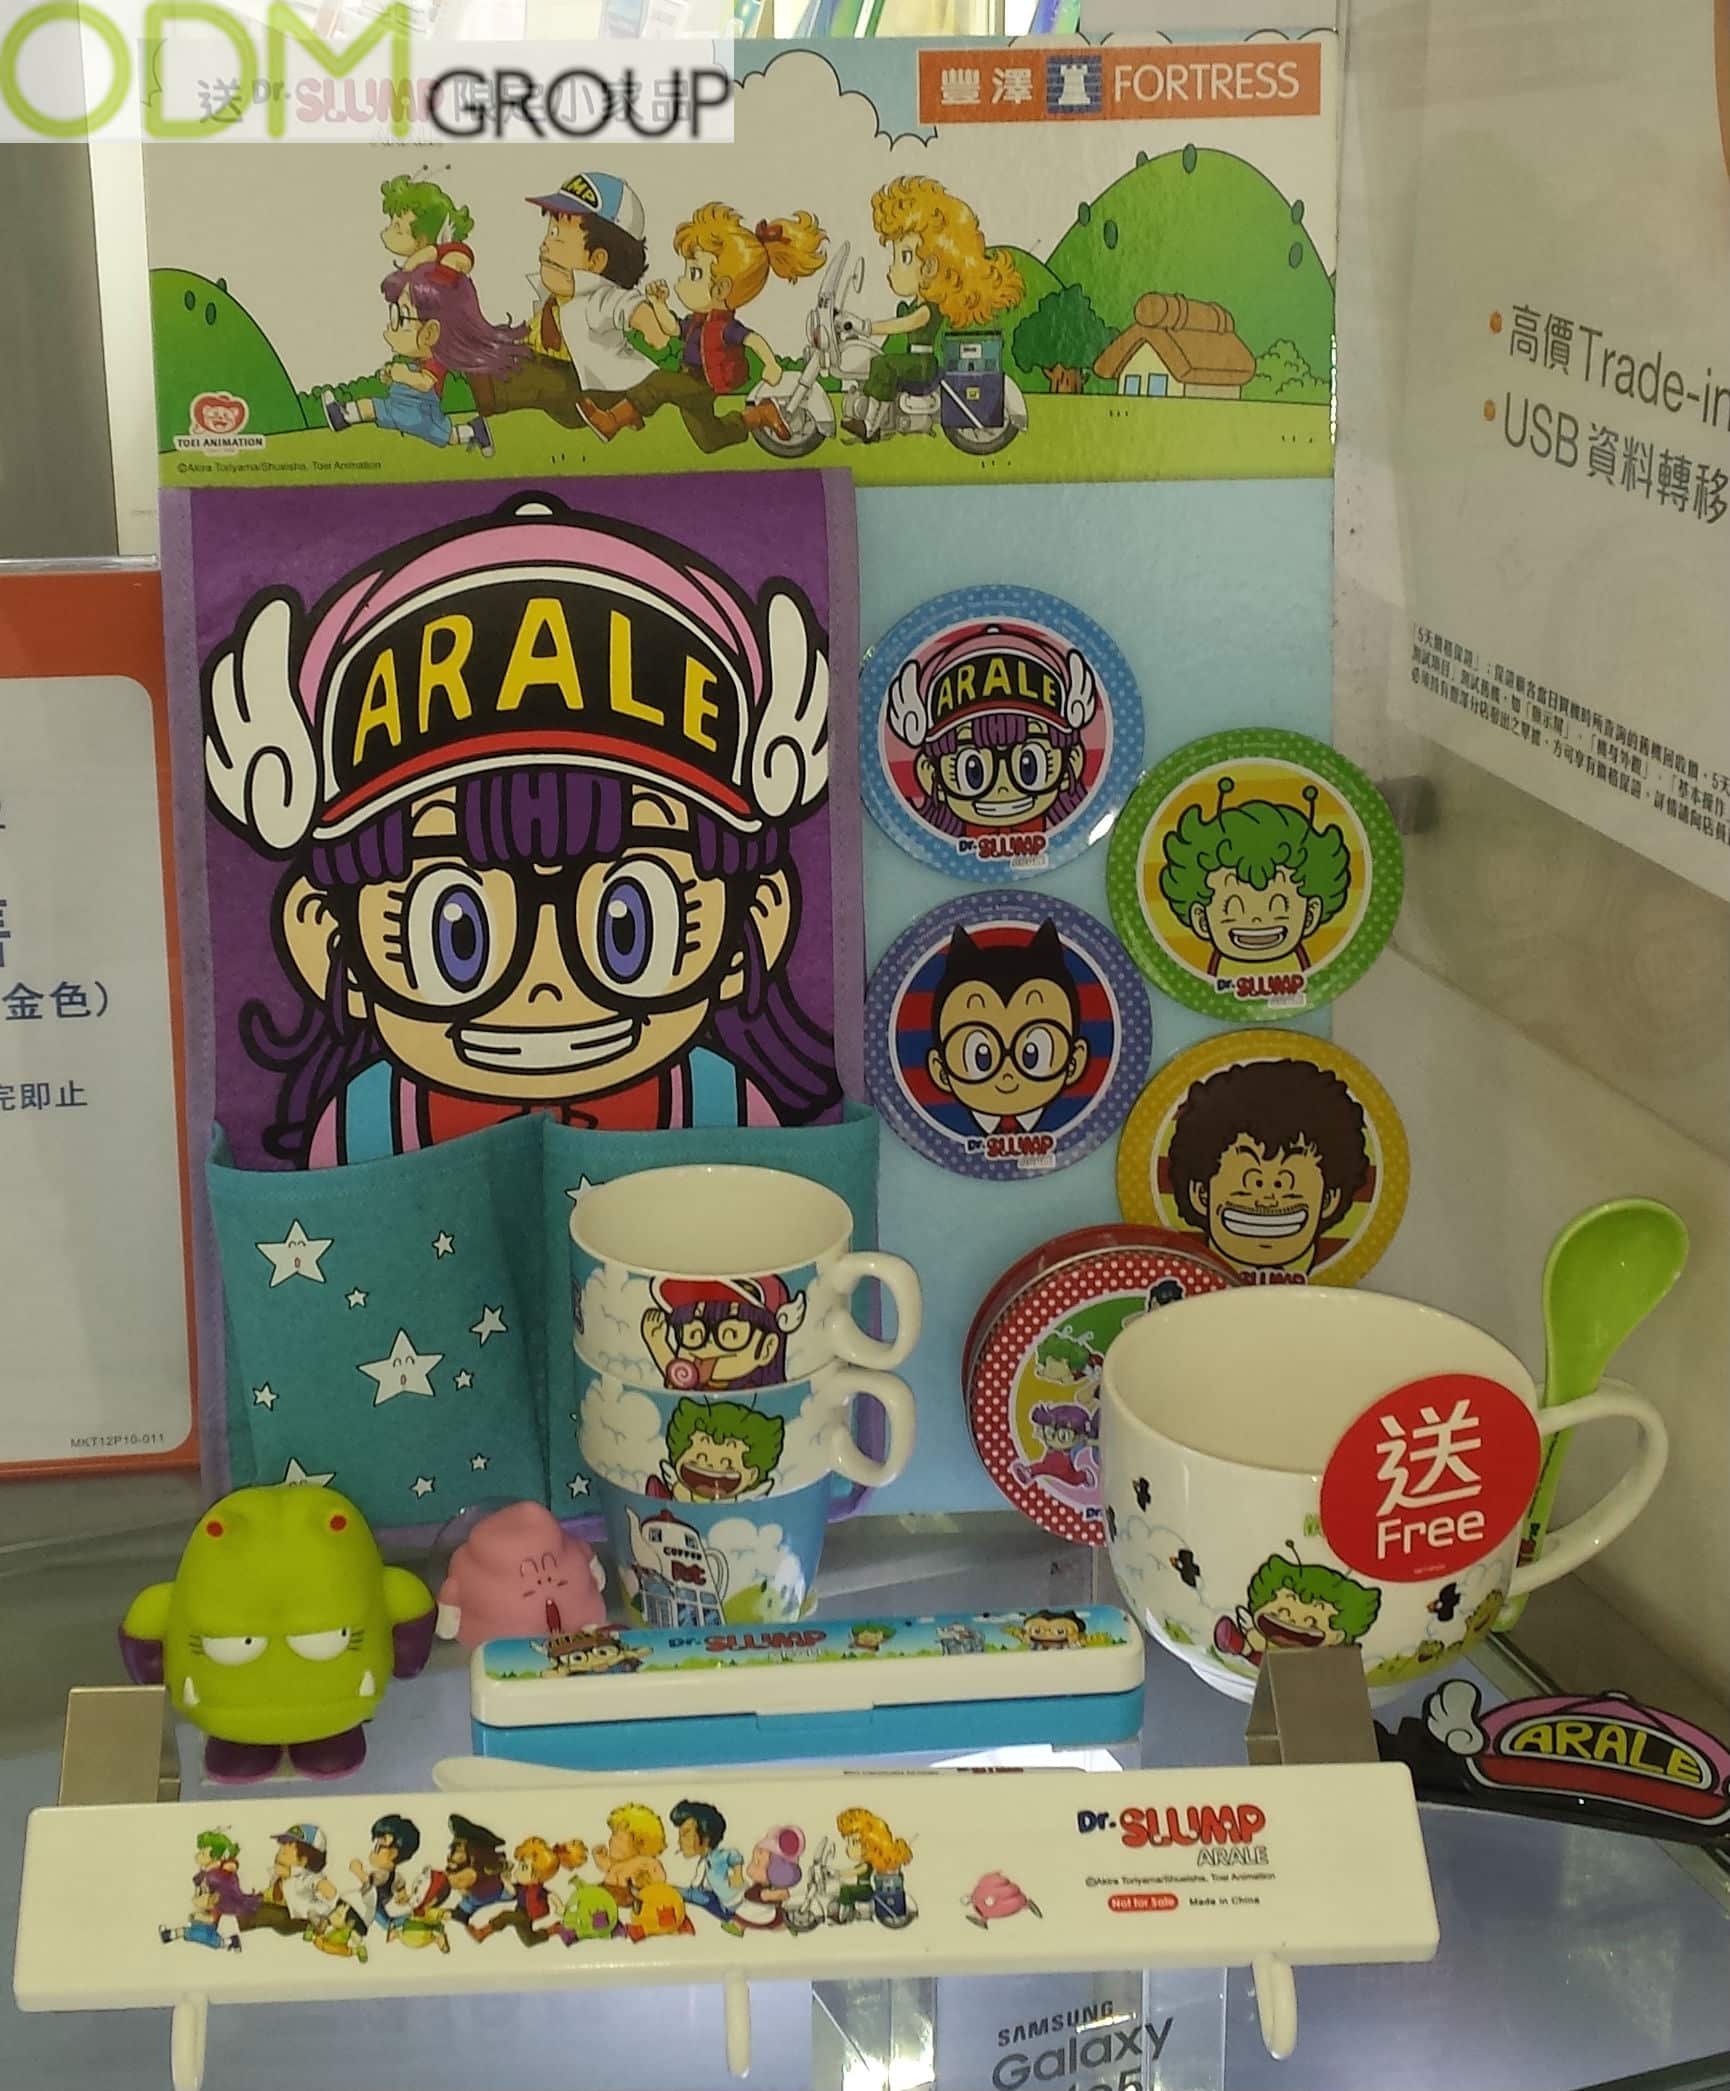 promotional mugs